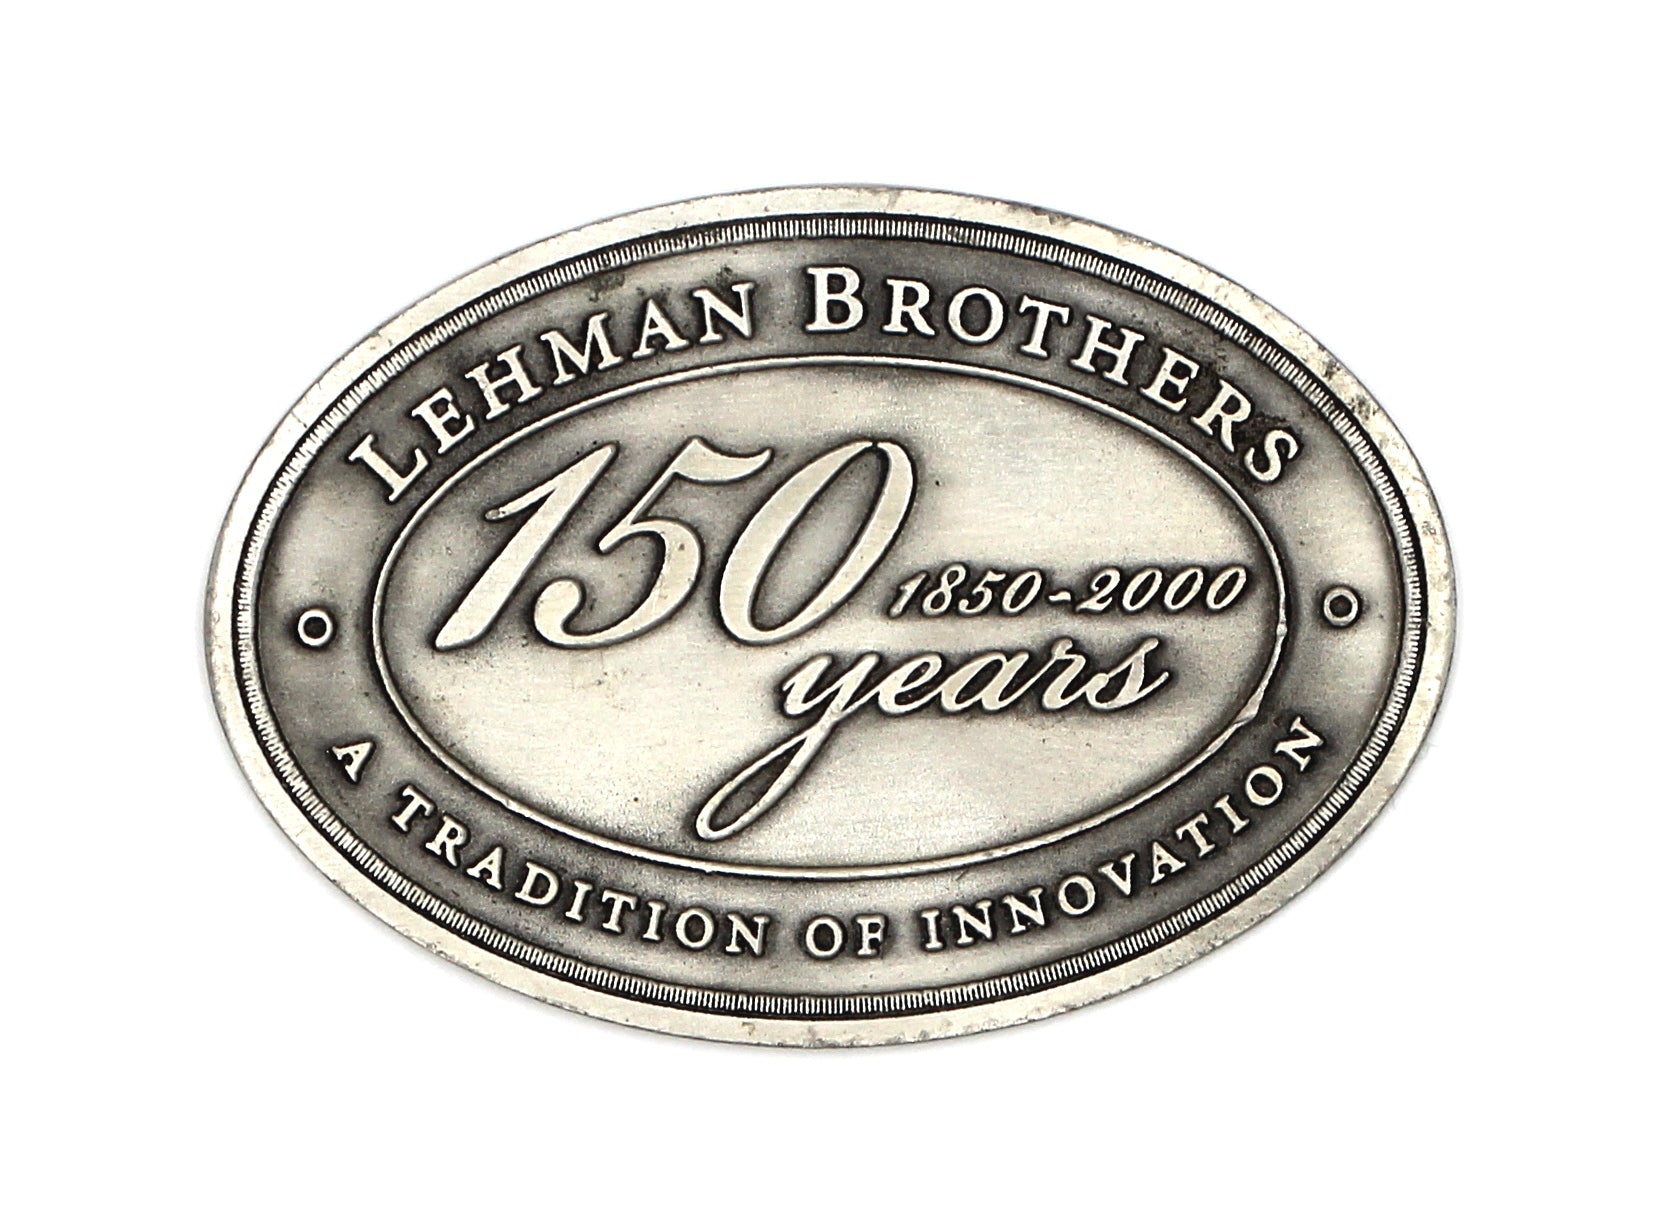 Lehman Brothers 150th Anniversary Paperweight - Wall Street Treasures